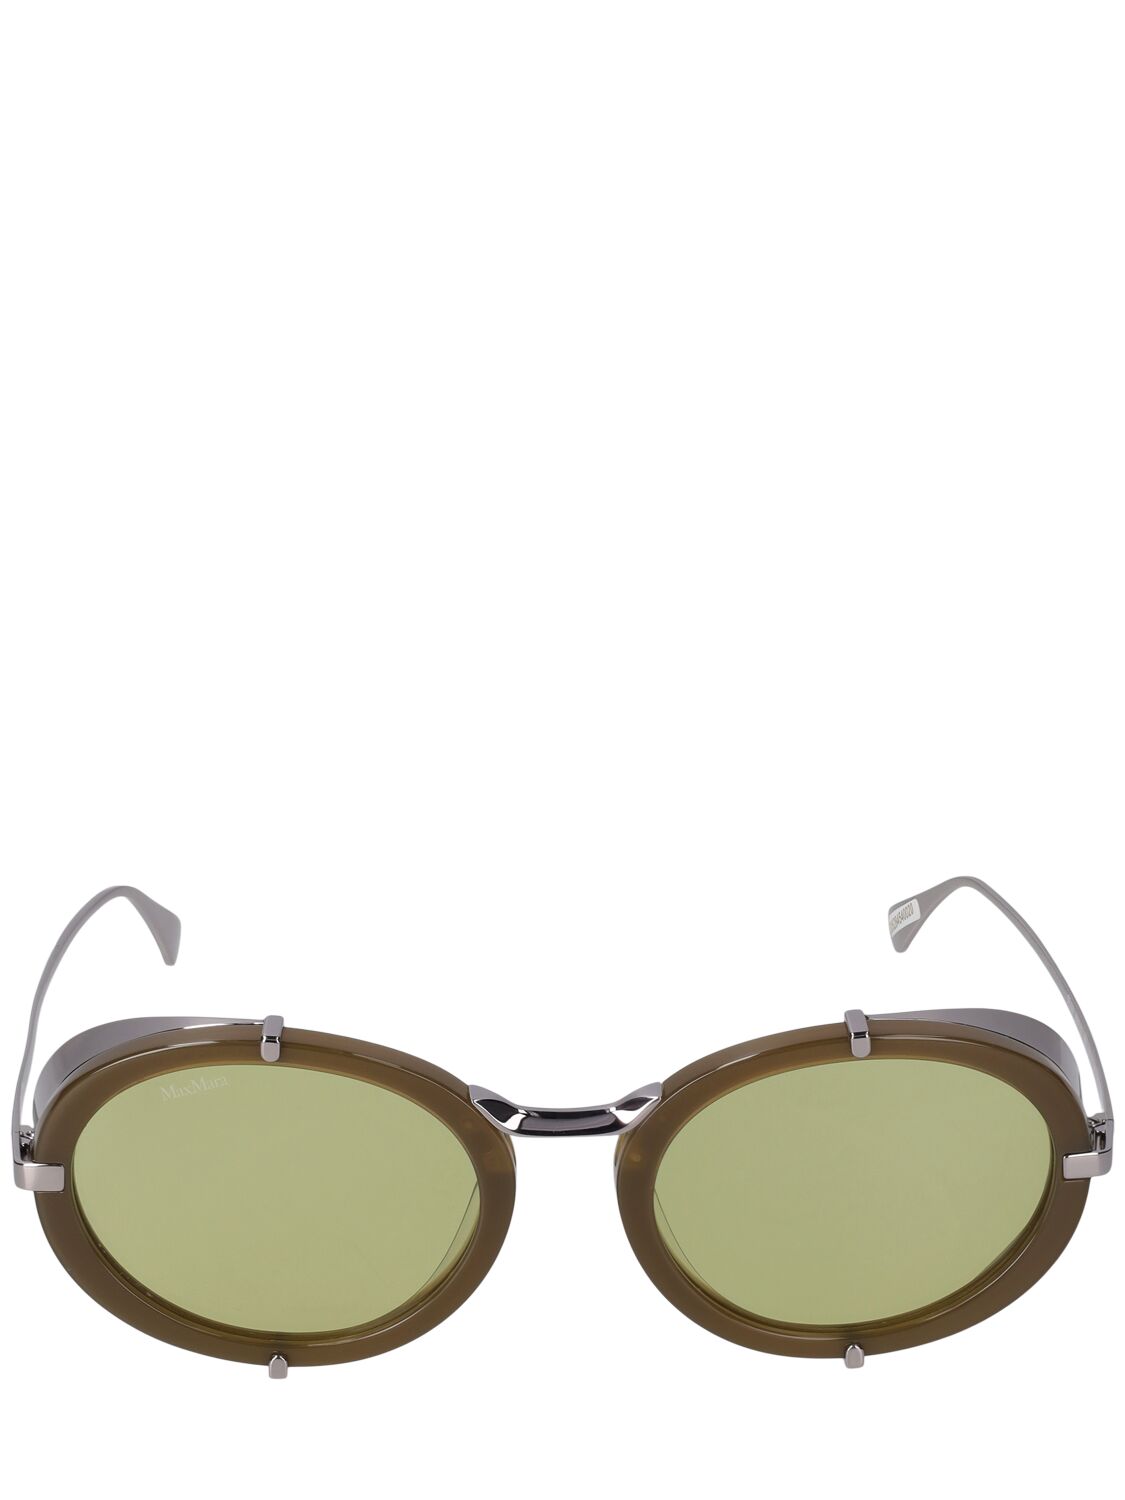 Max Mara Selma Round Metal Sunglasses In Shiny Green